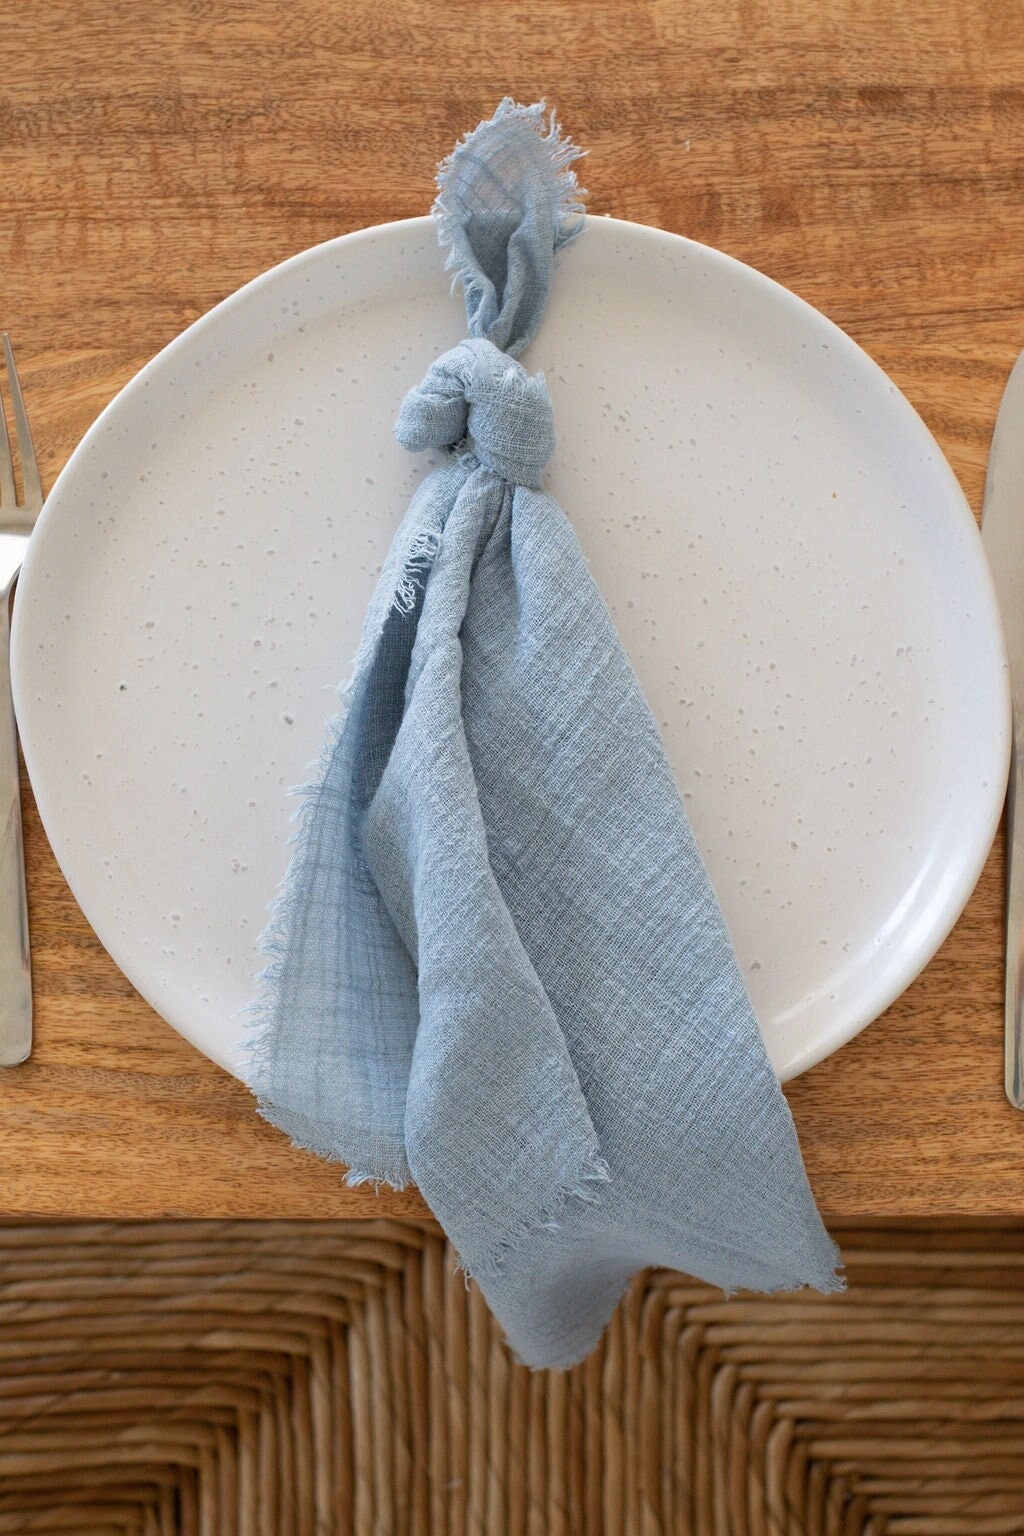 Cloth Napkins Set of 12 by Nest Above - Blue Cotton & Linen Table Napkin  Set - Blue - No Iron - Washable - Reusable for Dinner or Brunch